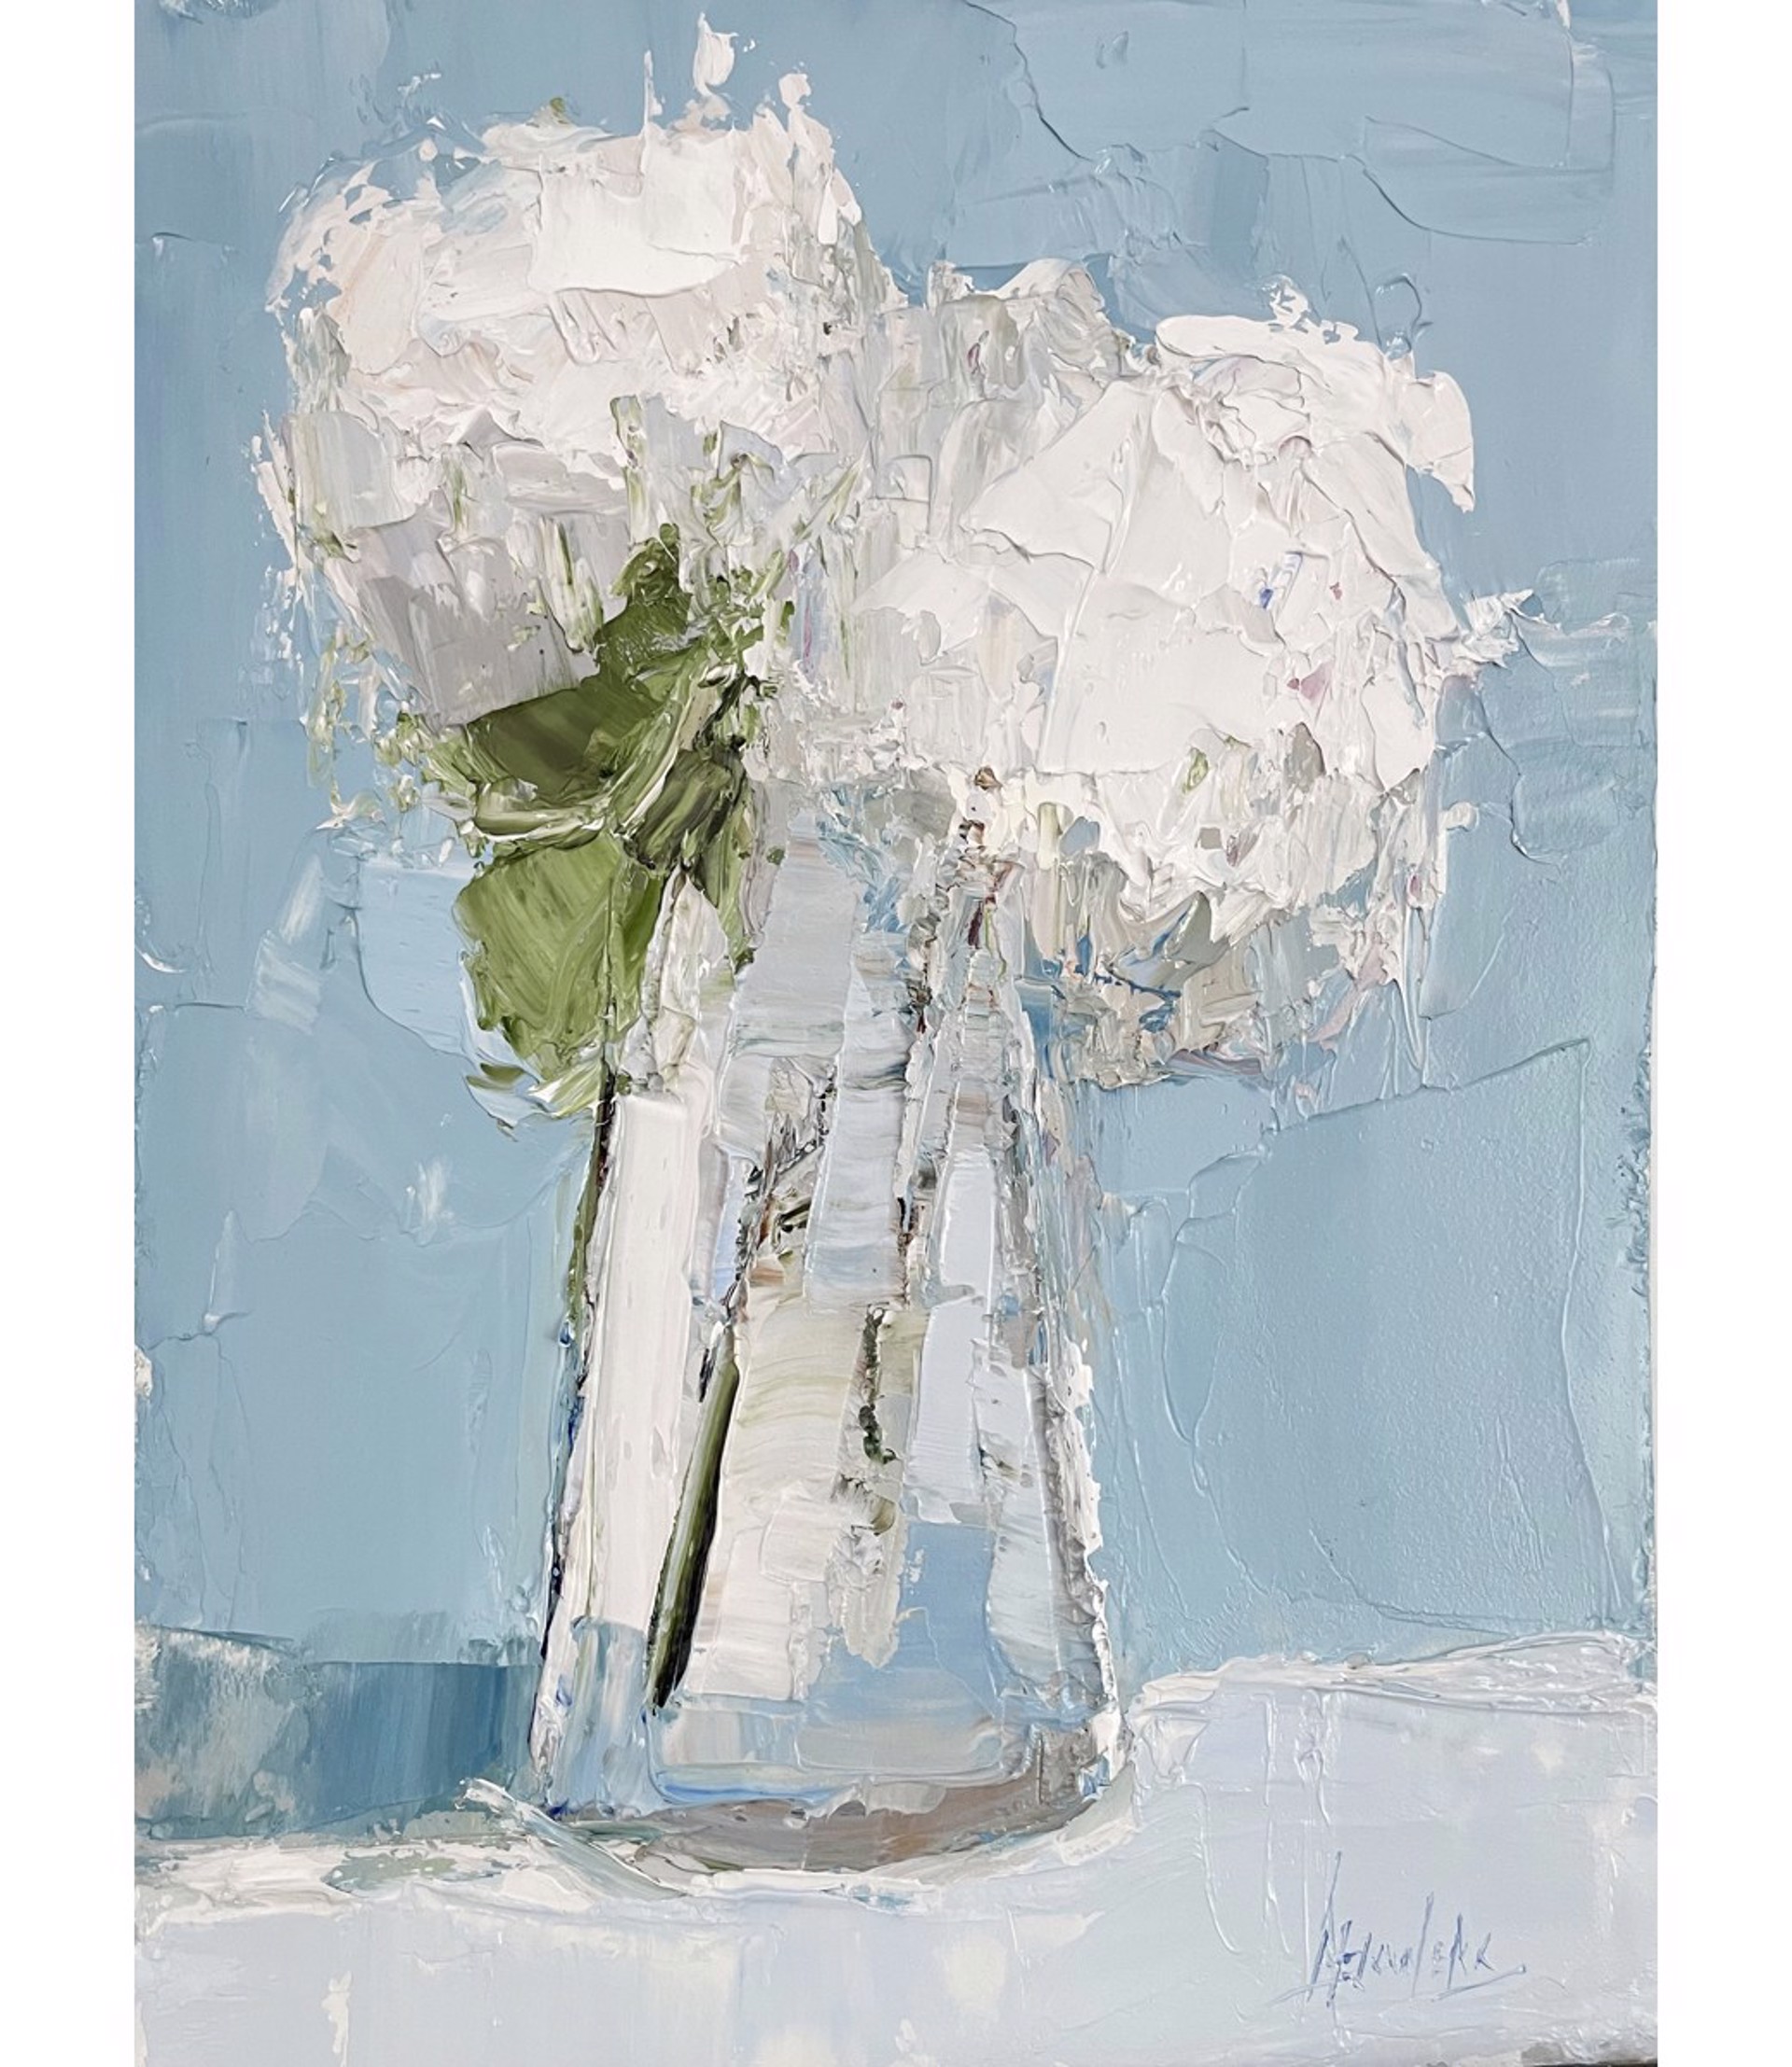 White Hydrangeas, Blue Room by Barbara Flowers